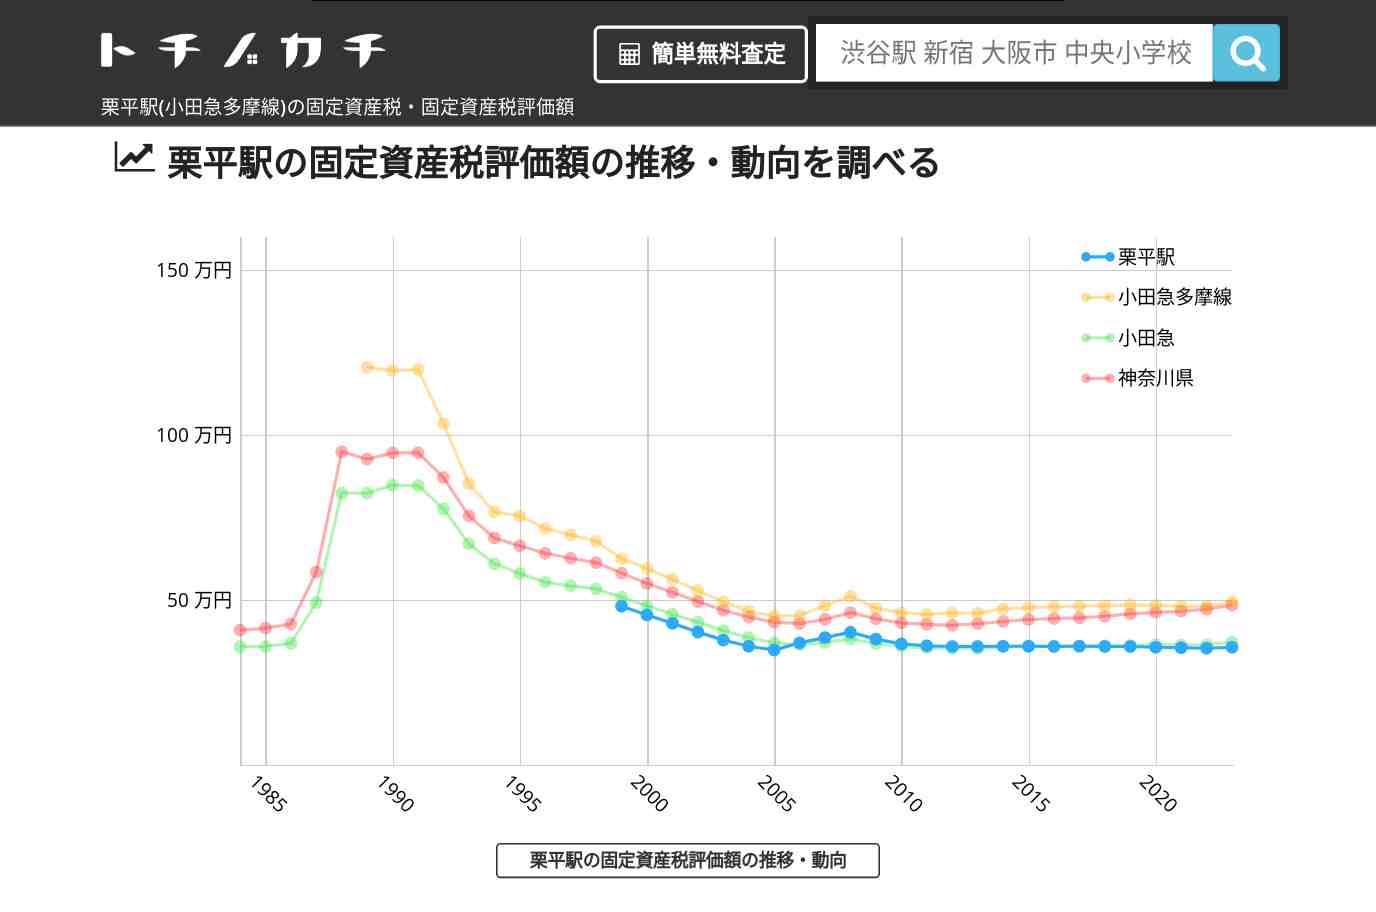 栗平駅(小田急多摩線)の固定資産税・固定資産税評価額 | トチノカチ